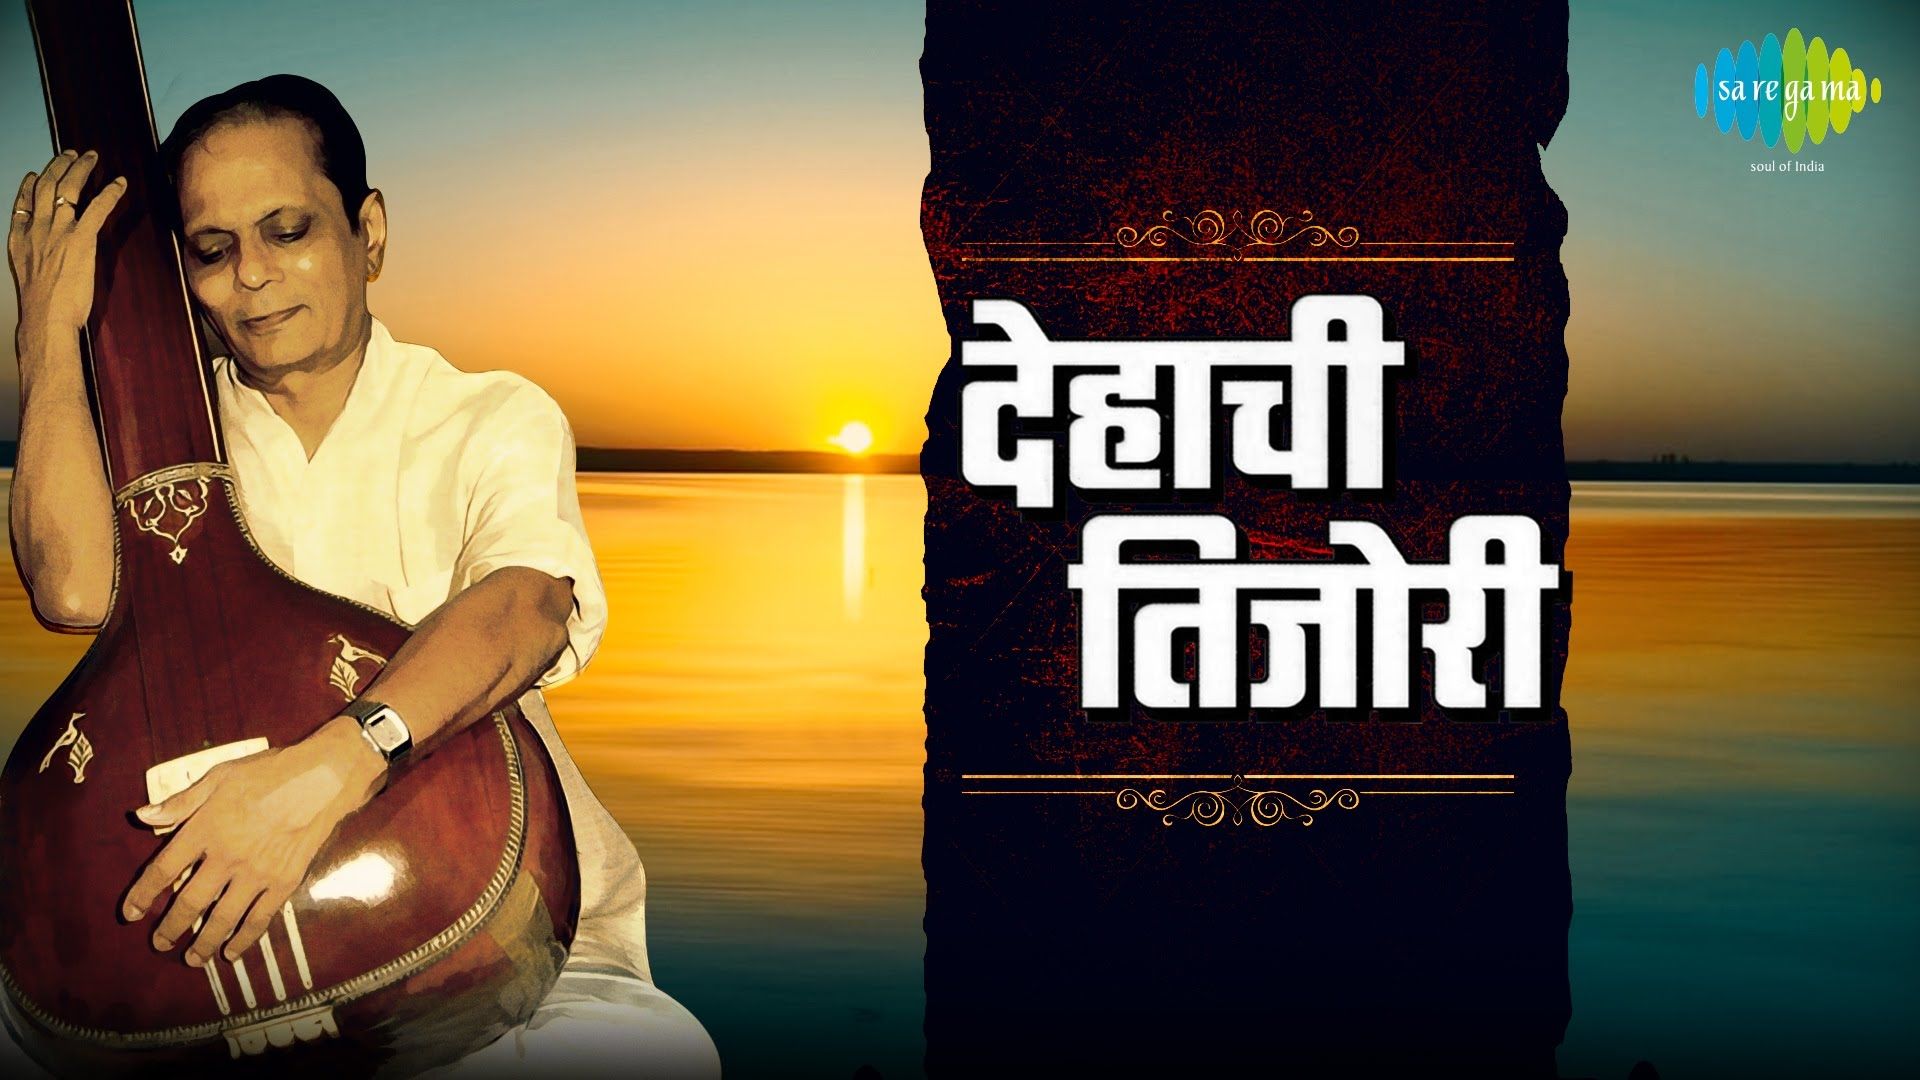 Marathi Audio Songs By Sudhir Phadke Bhavgeet